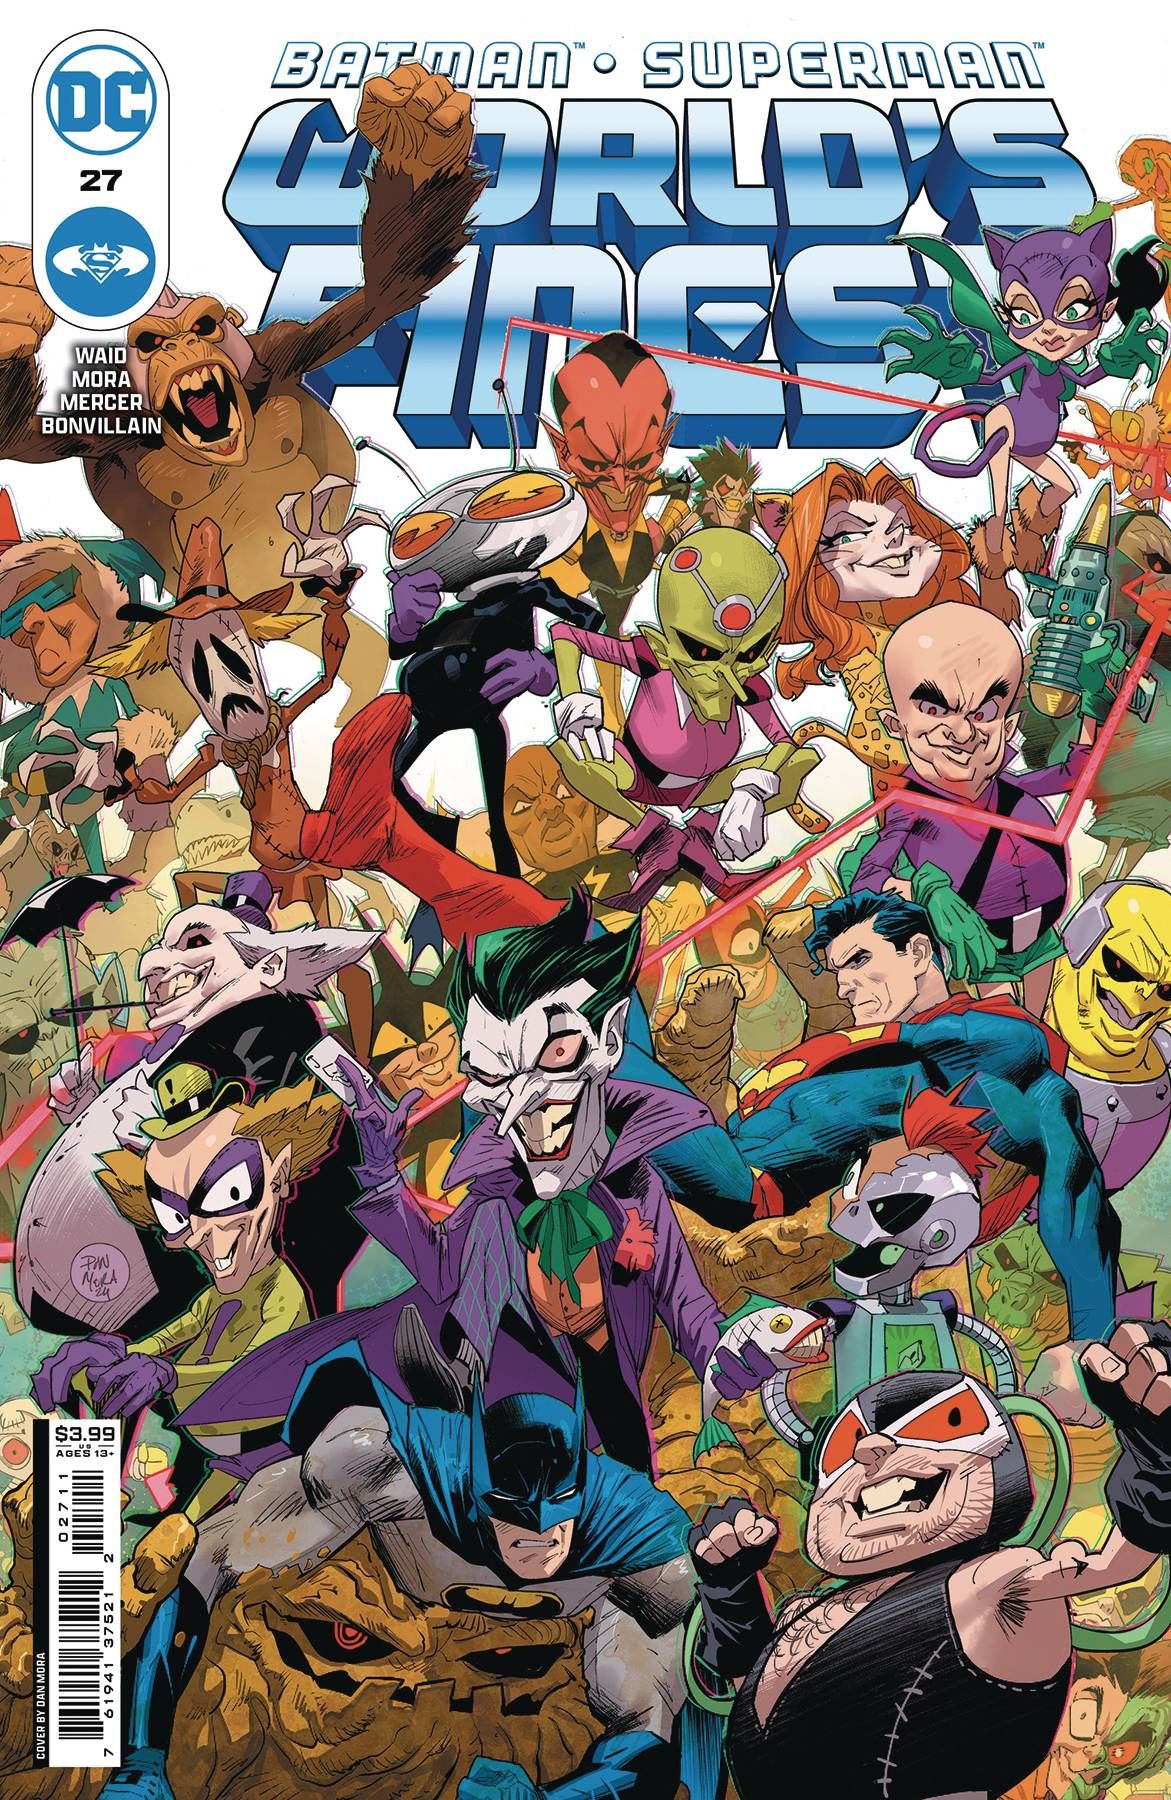 Batman Superman World's Finest 27 Main Cover: versões chibi dos supervilões da DC lutam contra Batman e Superman.